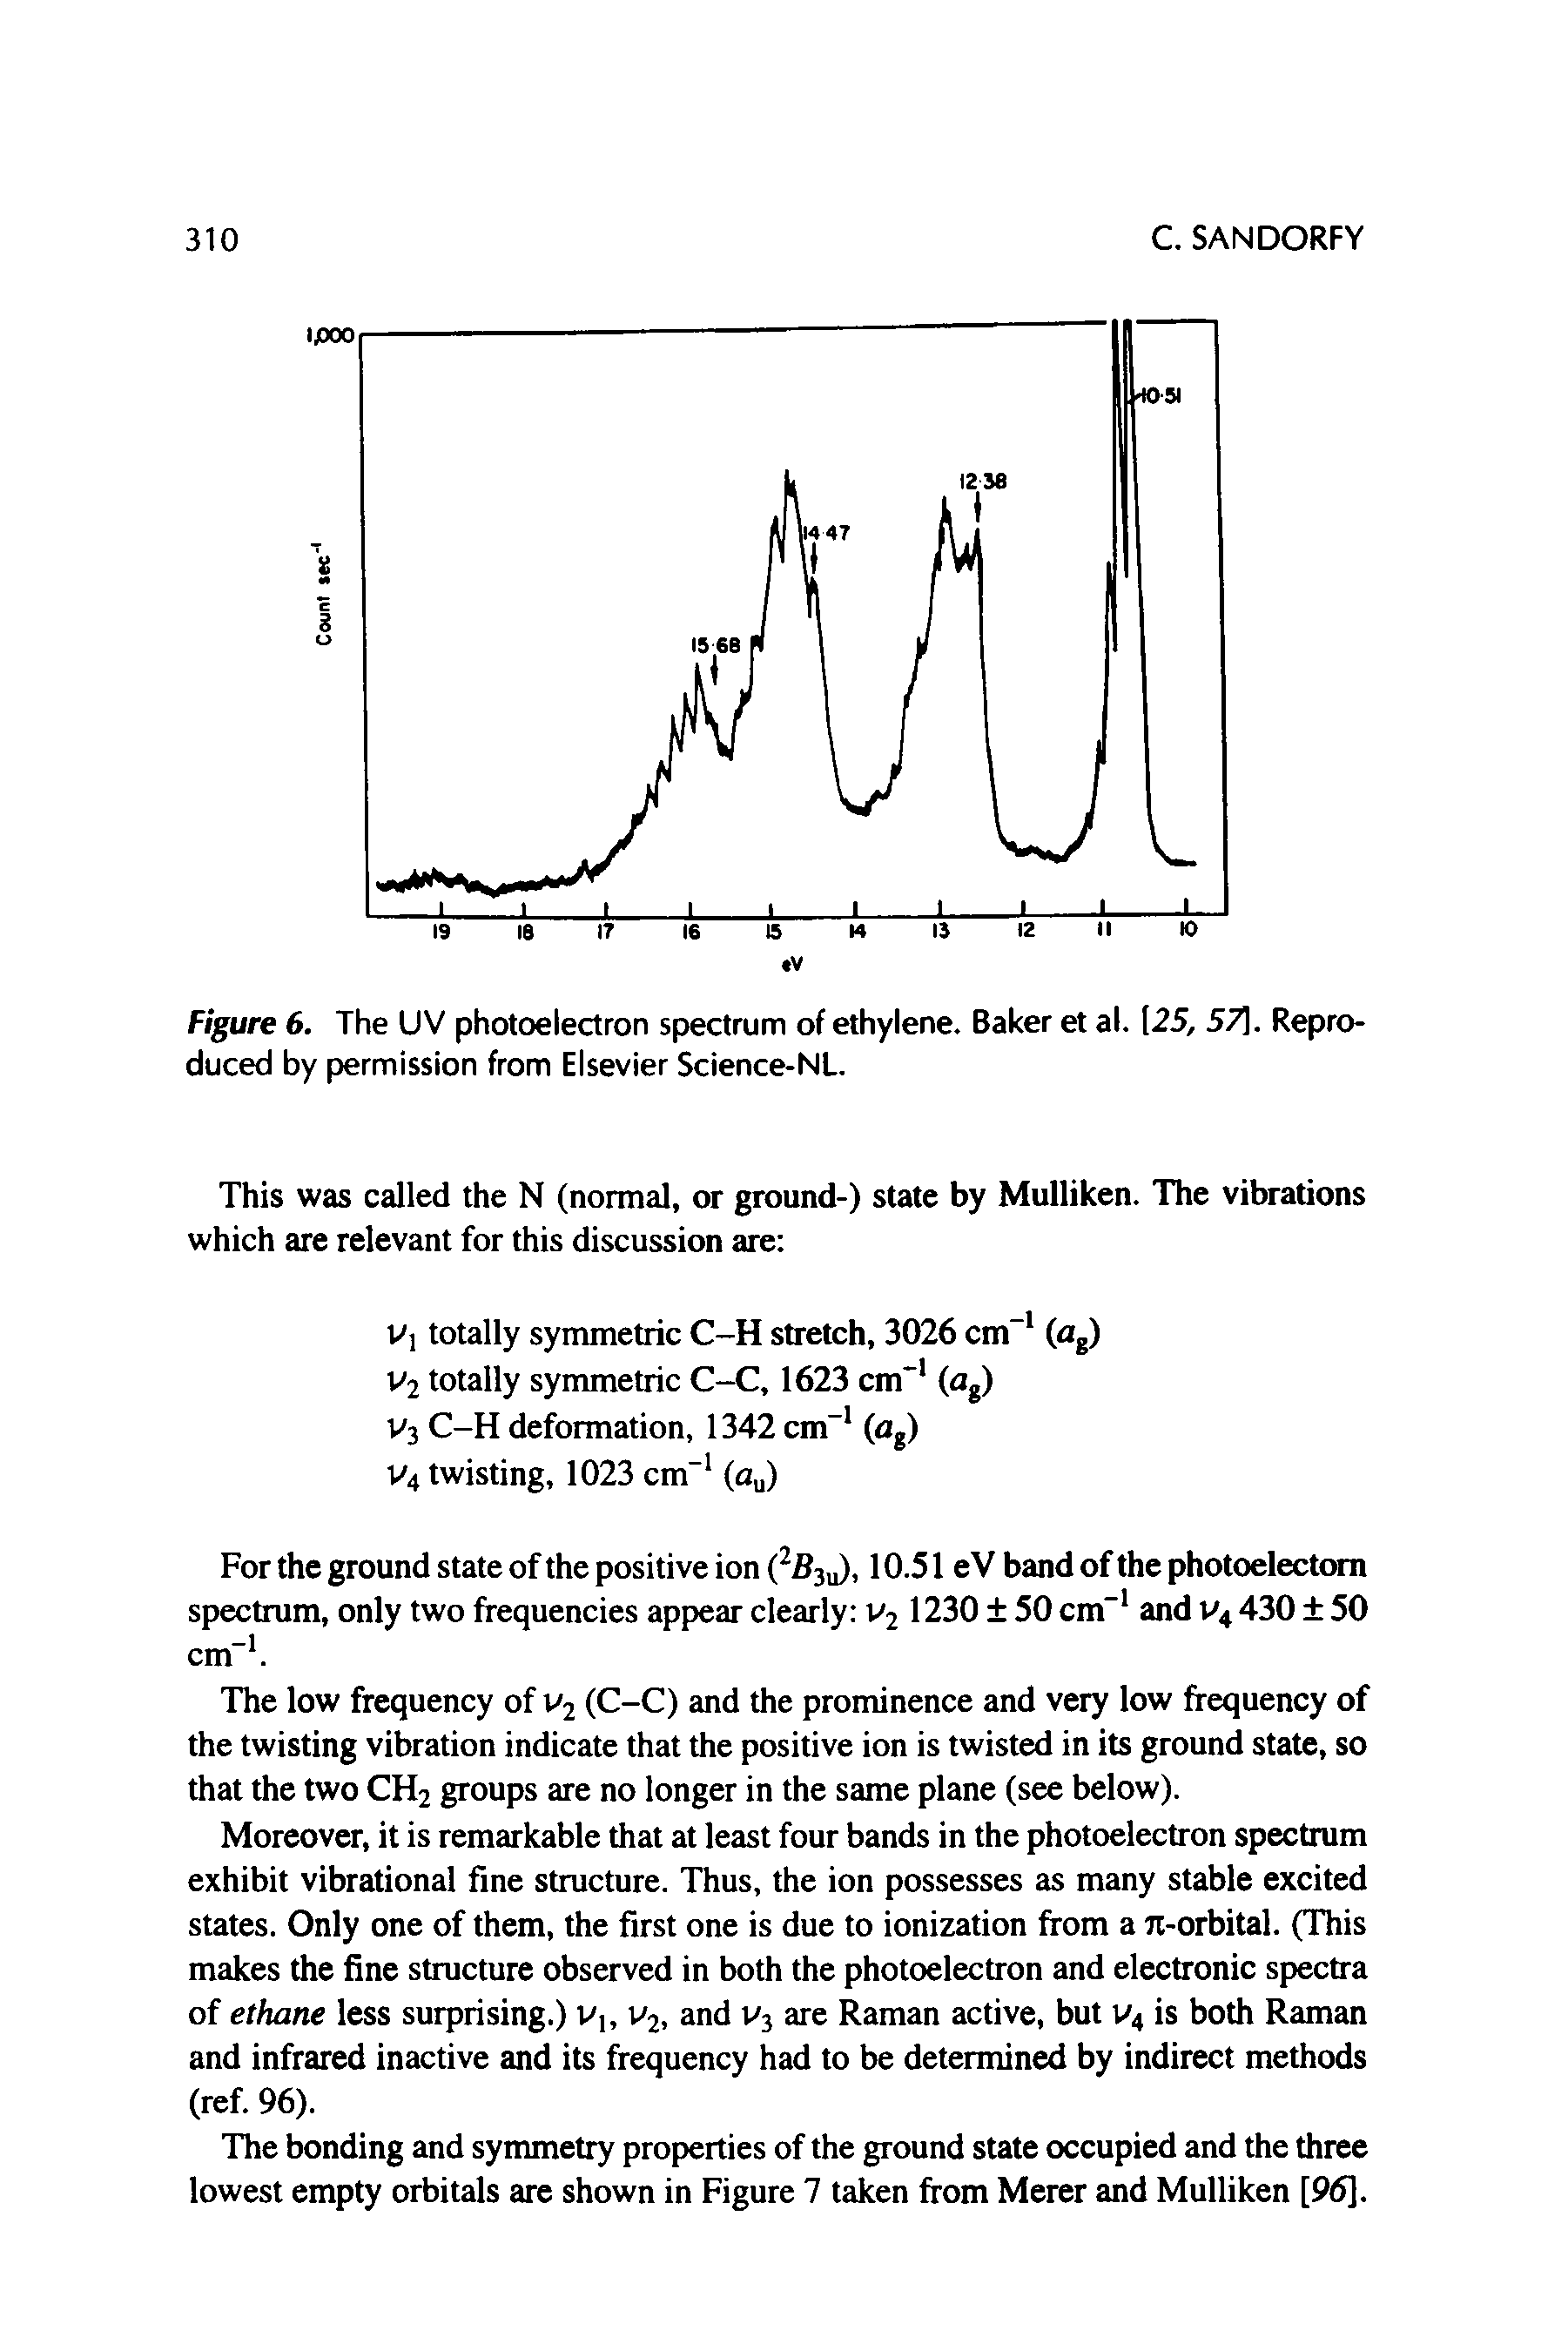 Figure 6. The UV photoelectron spectrum of ethylene. Baker et al. [25, 57], Reproduced by permission from Elsevier Science-NL...